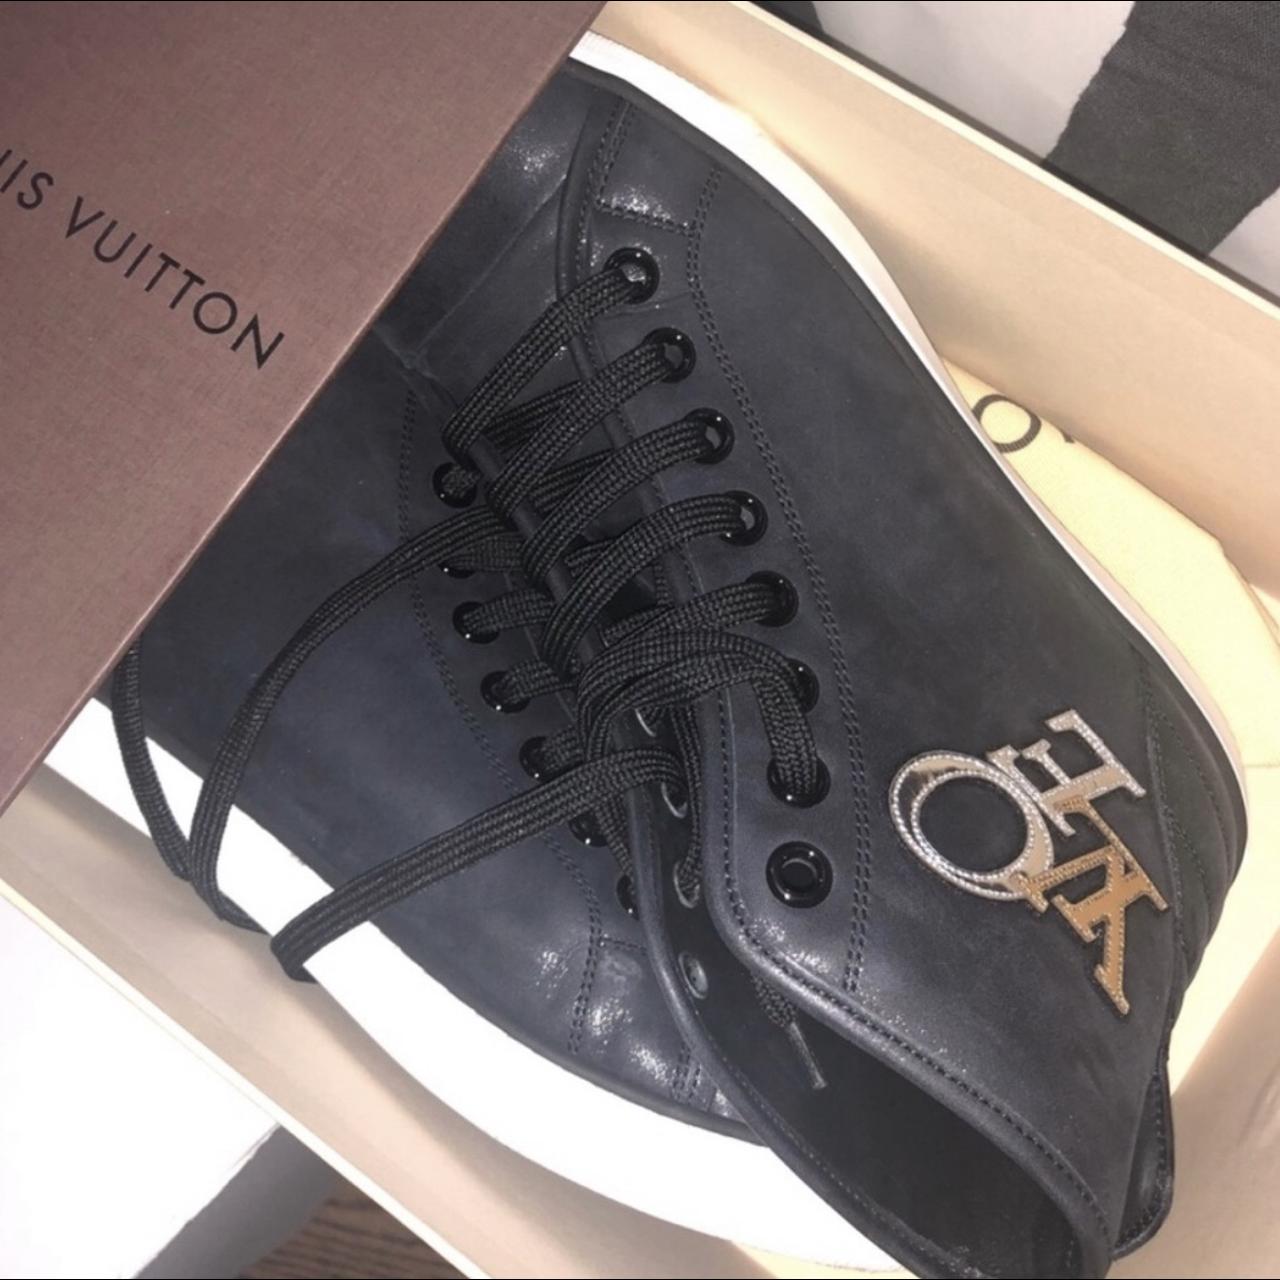 Authentic Louis Vuitton converse-style sneakers. - Depop